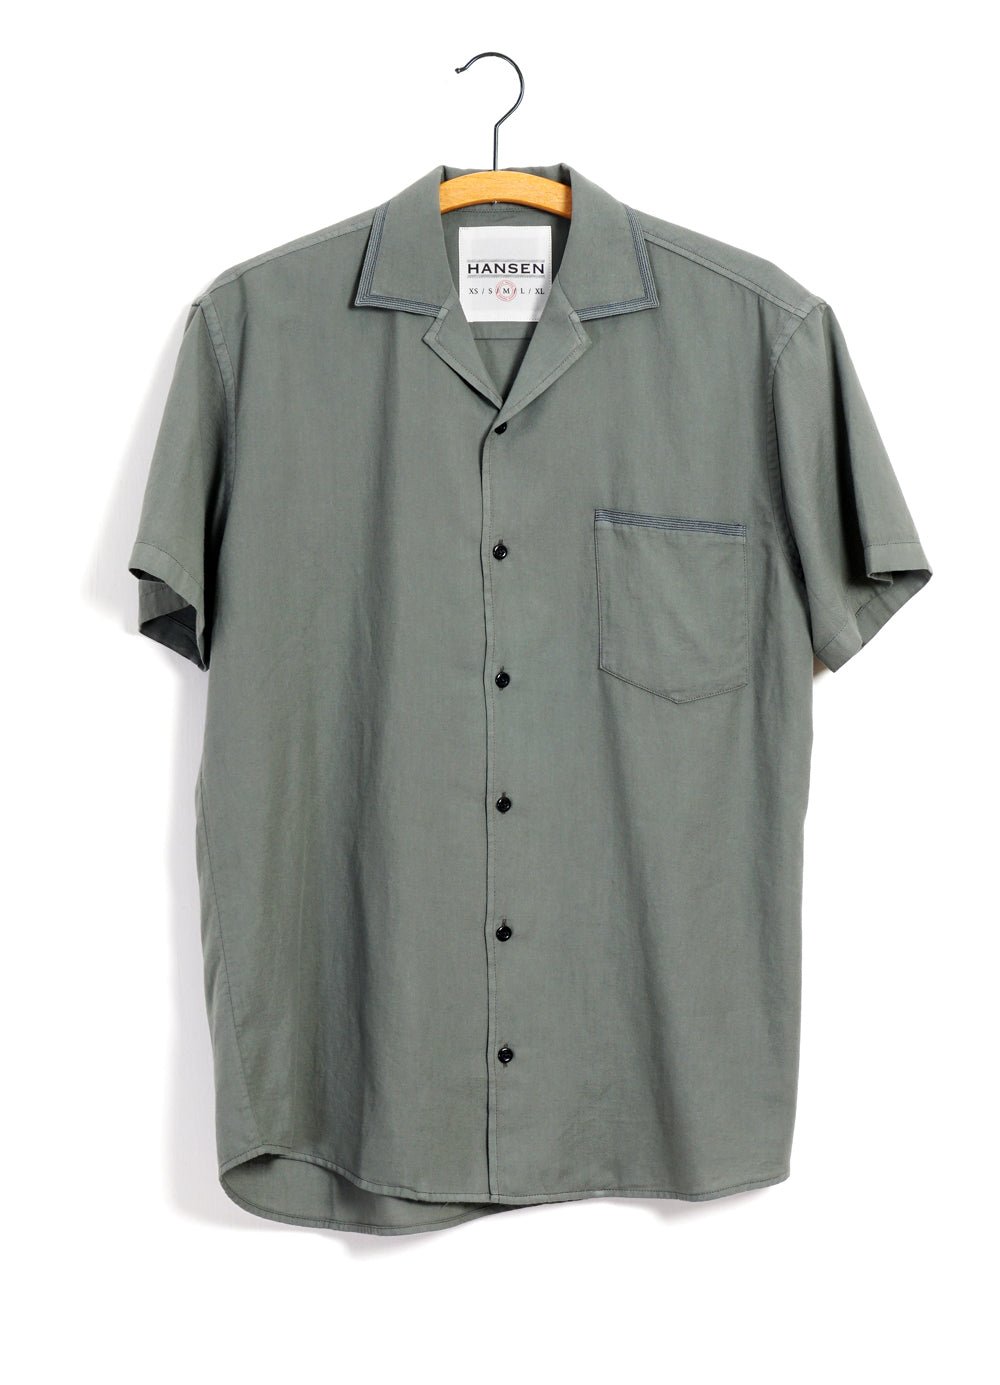 JONNY | Short Sleeve Shirt | Eucalyptus | HANSEN Garments